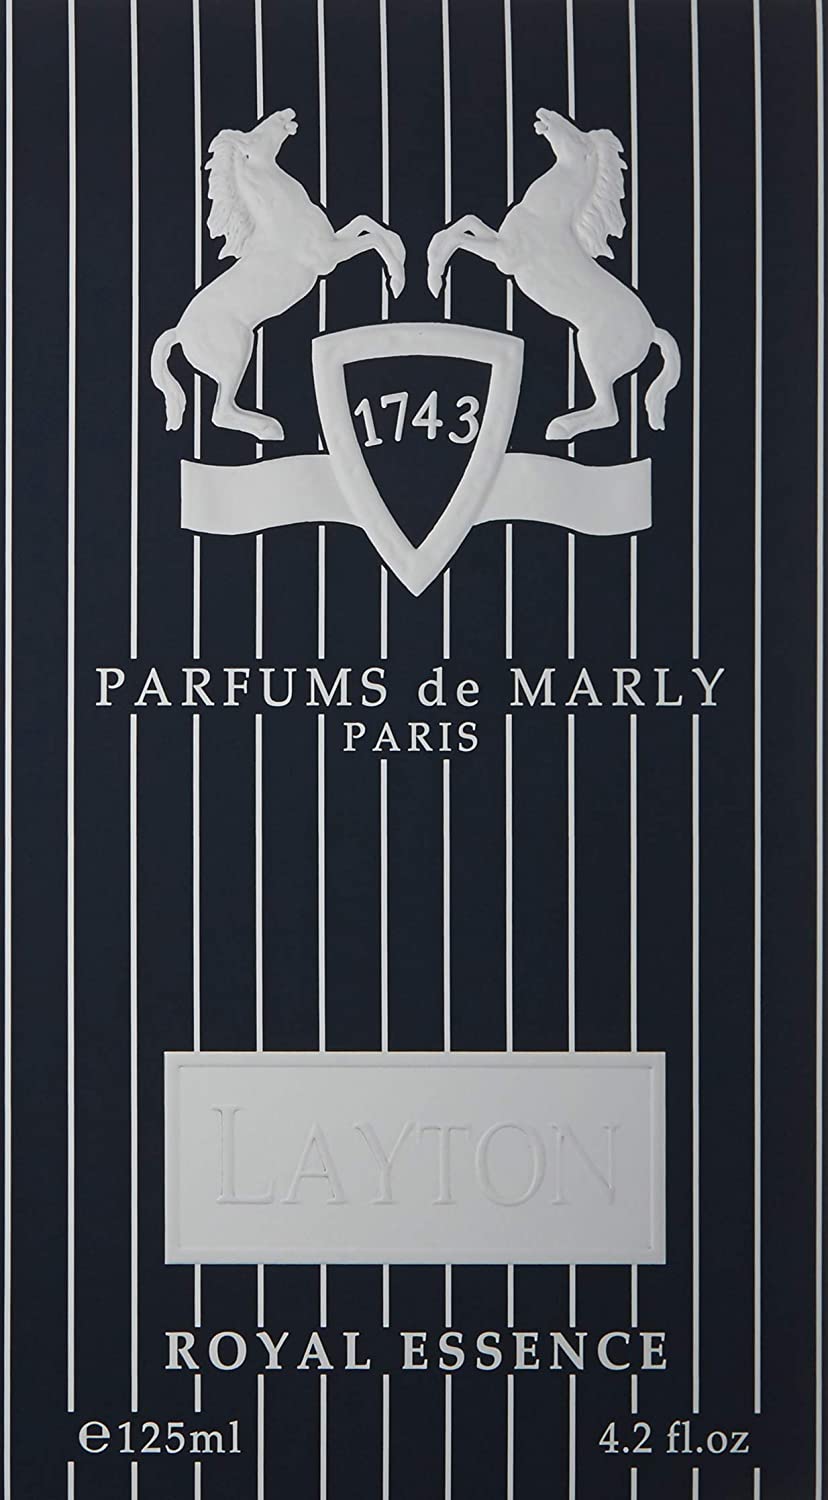 Parfums De Marly Layton official perfume sample 1.5ml 0.05 fl. o.z.